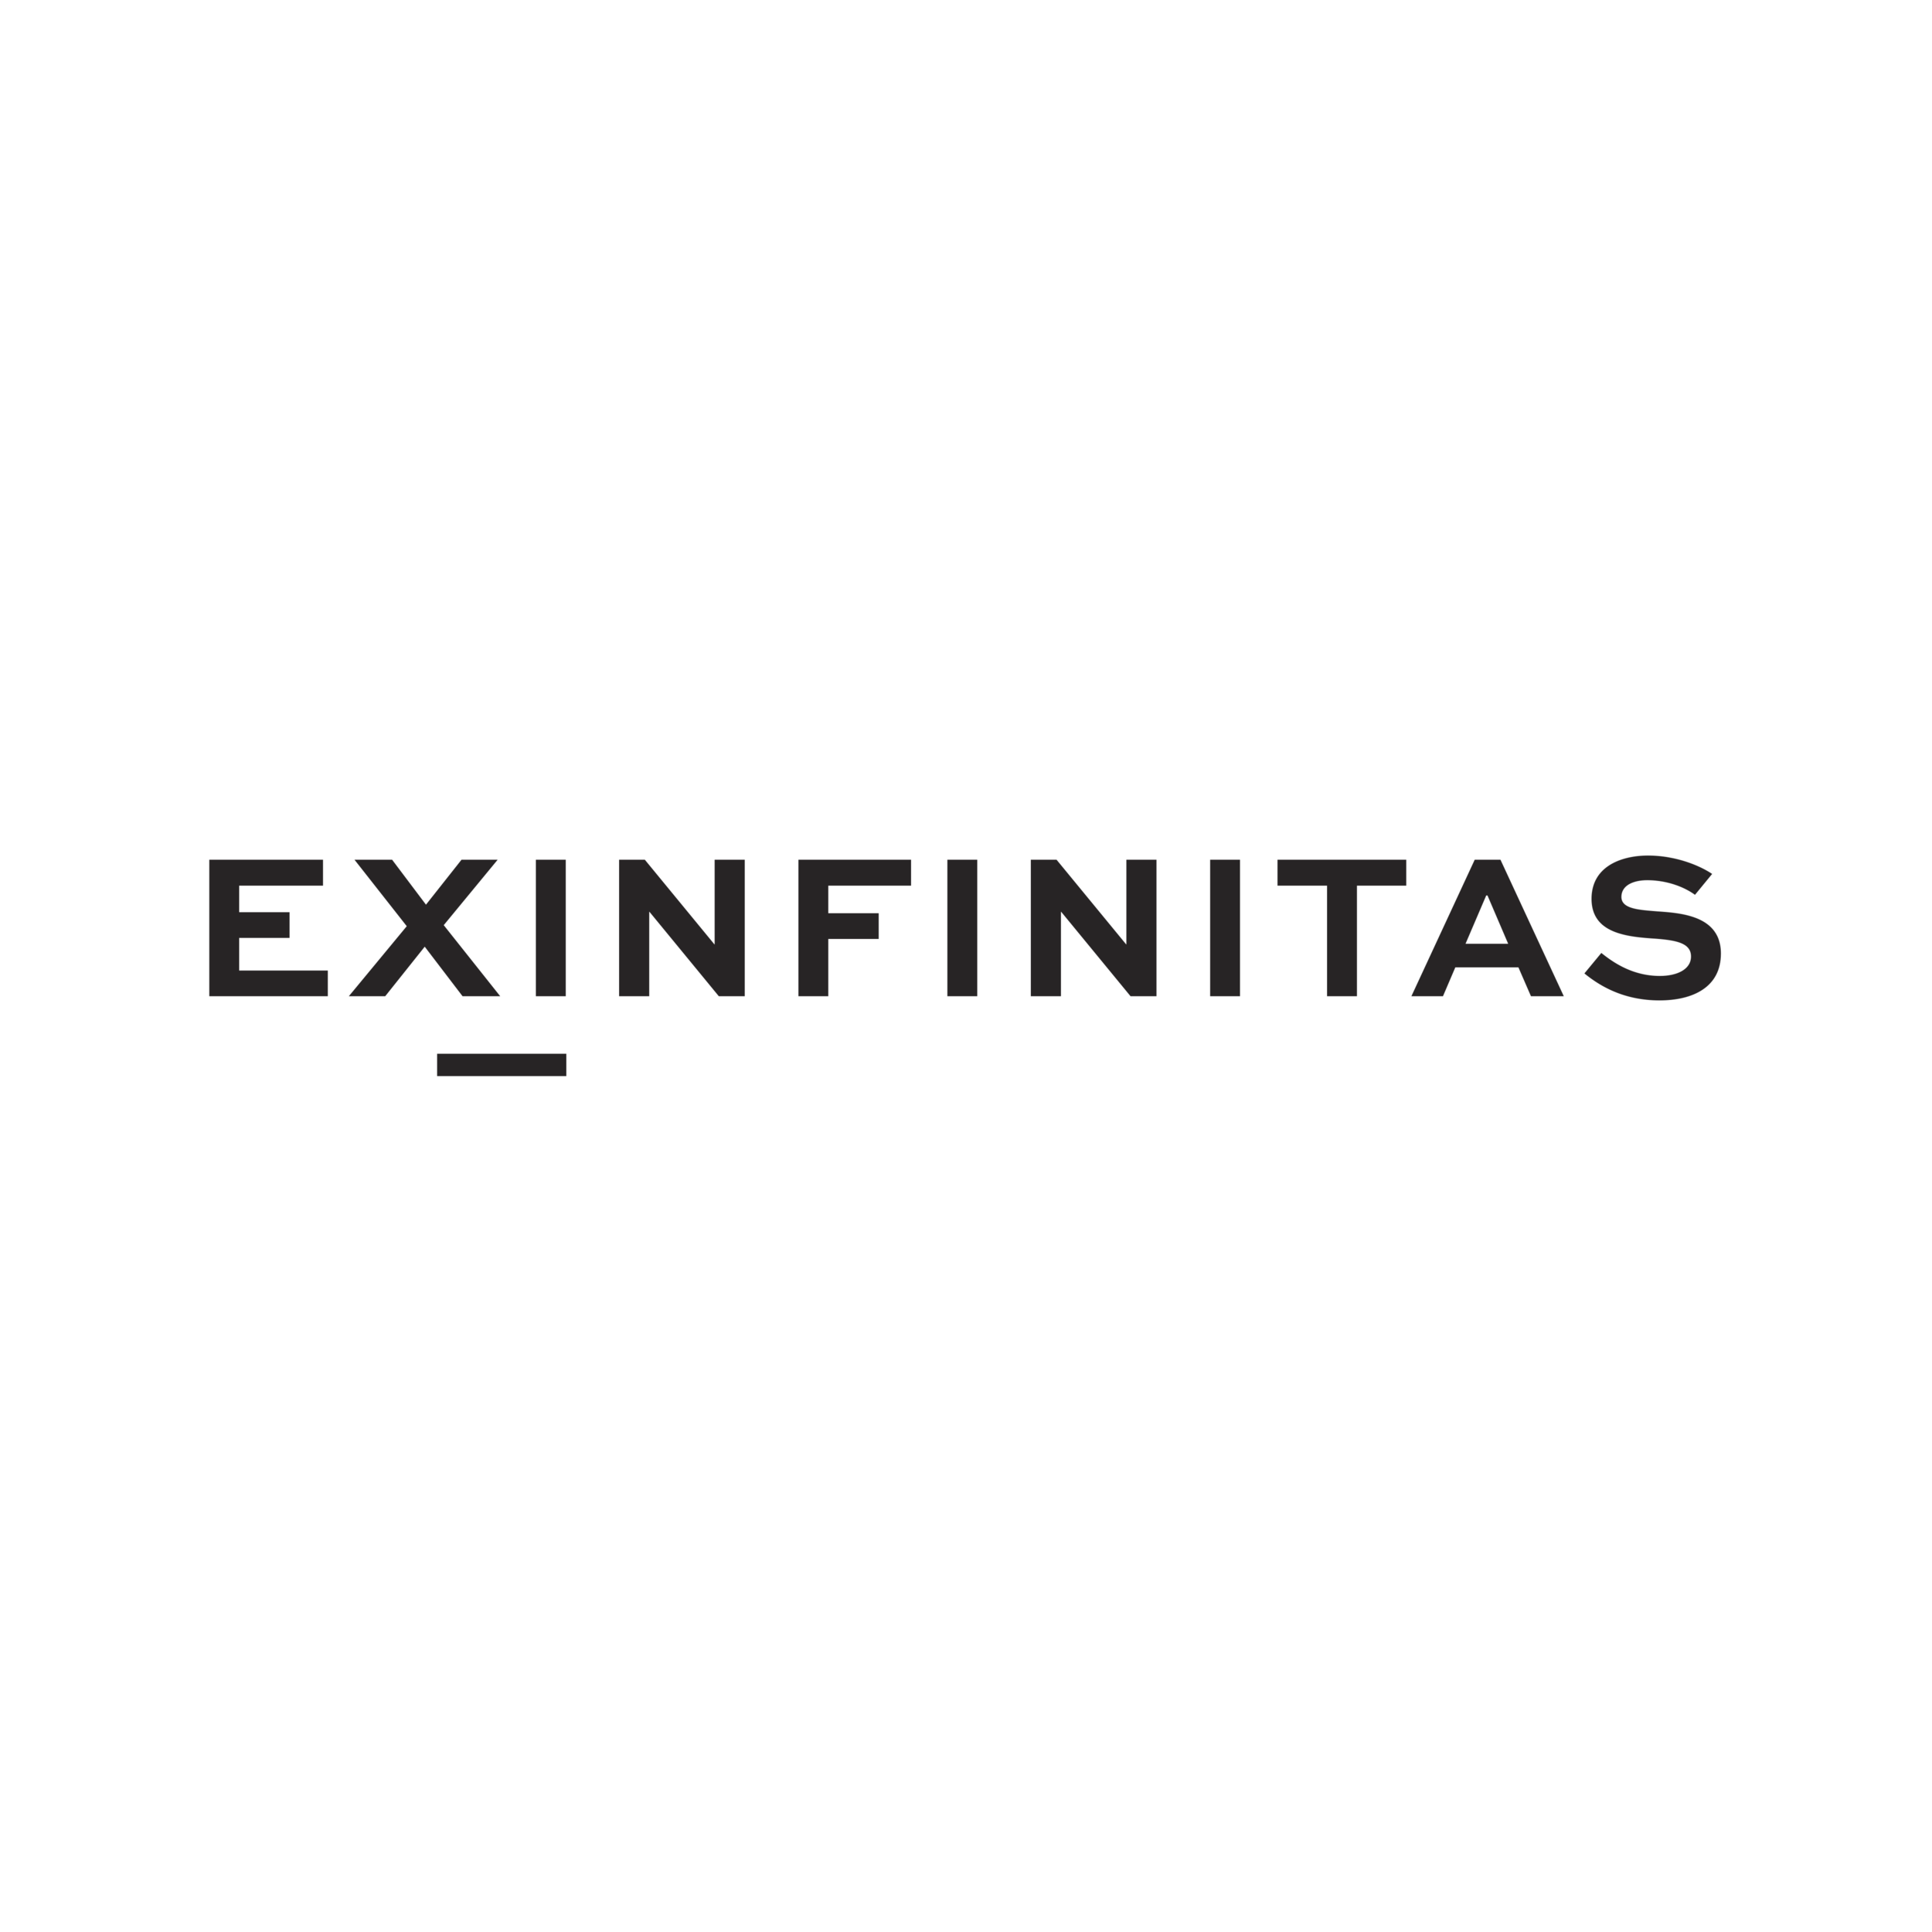 EX_INFINITAS Logo copy.png